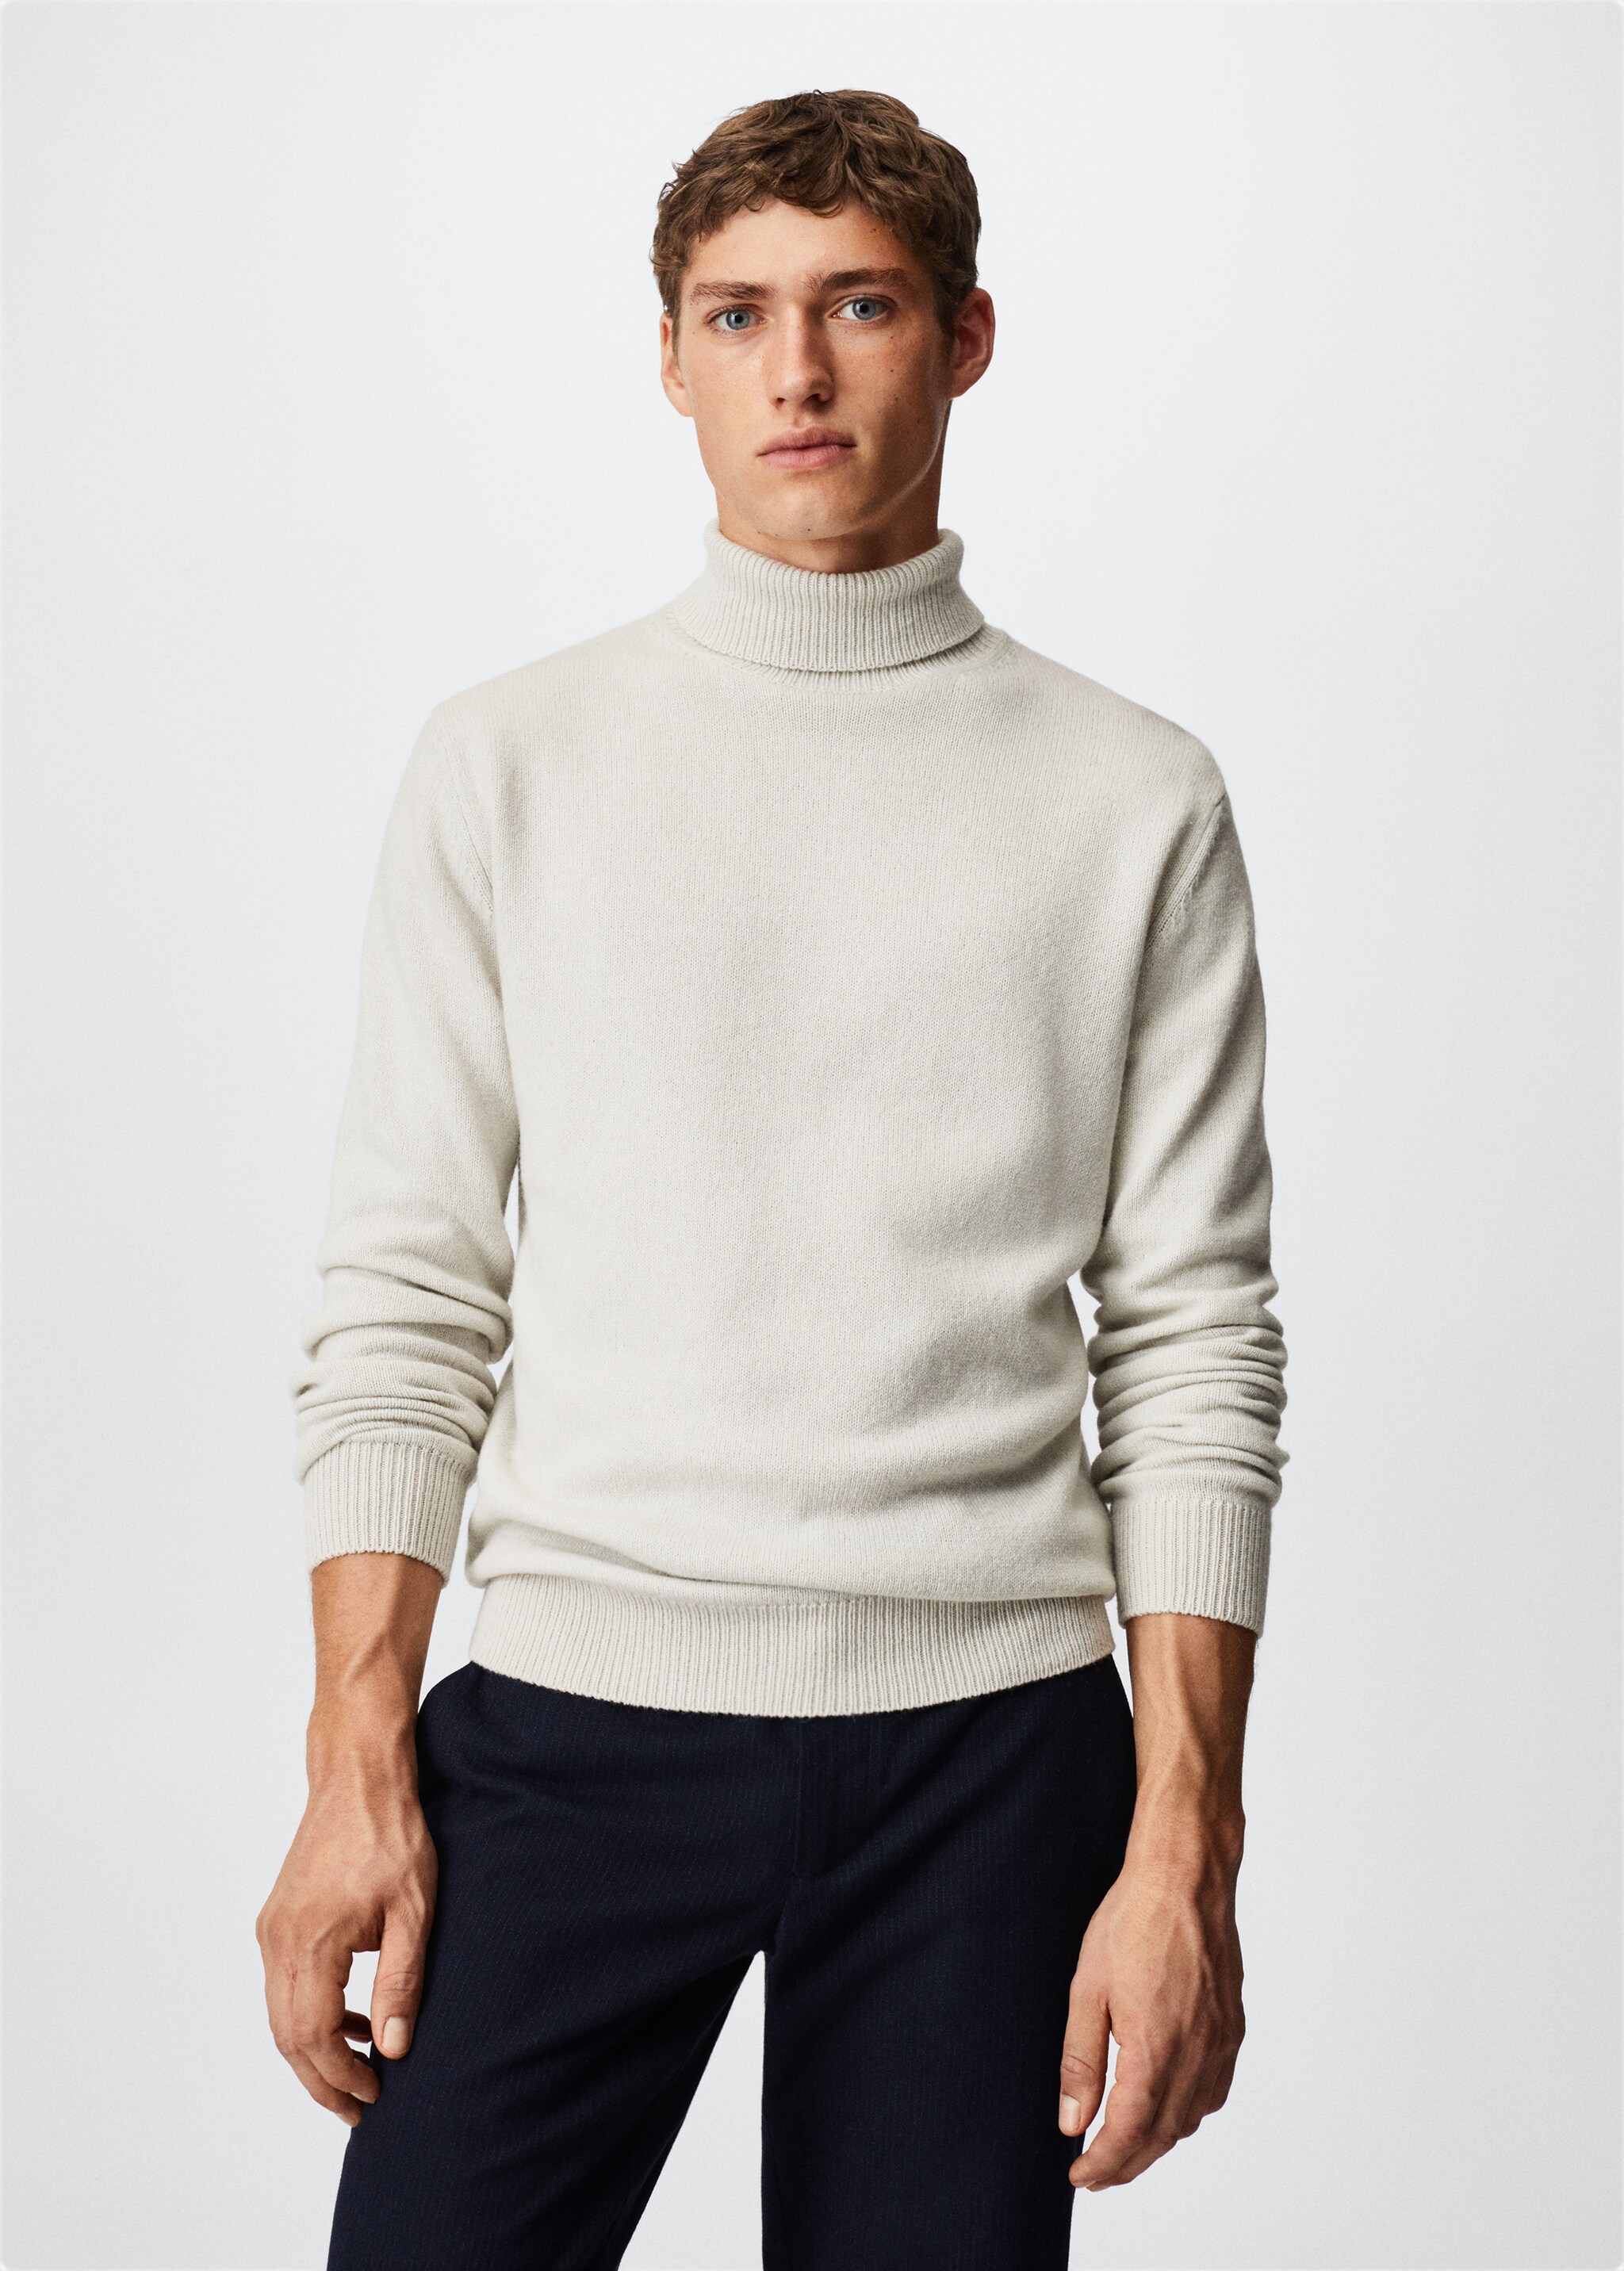 Turtleneck wool sweater - Medium plane